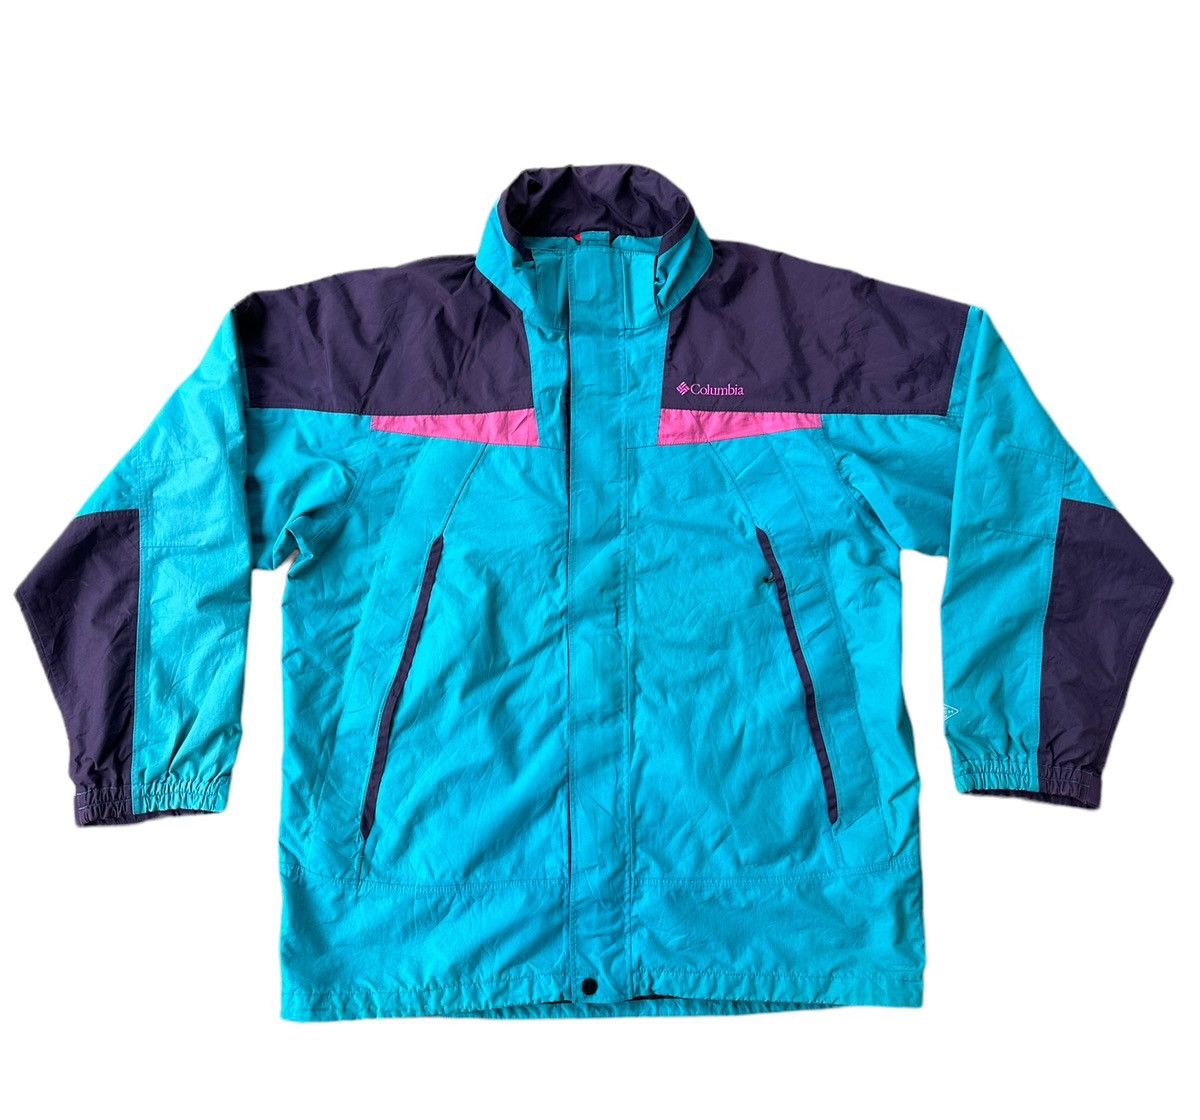 Columbia Columbia outdoor waterproof jacket | Grailed